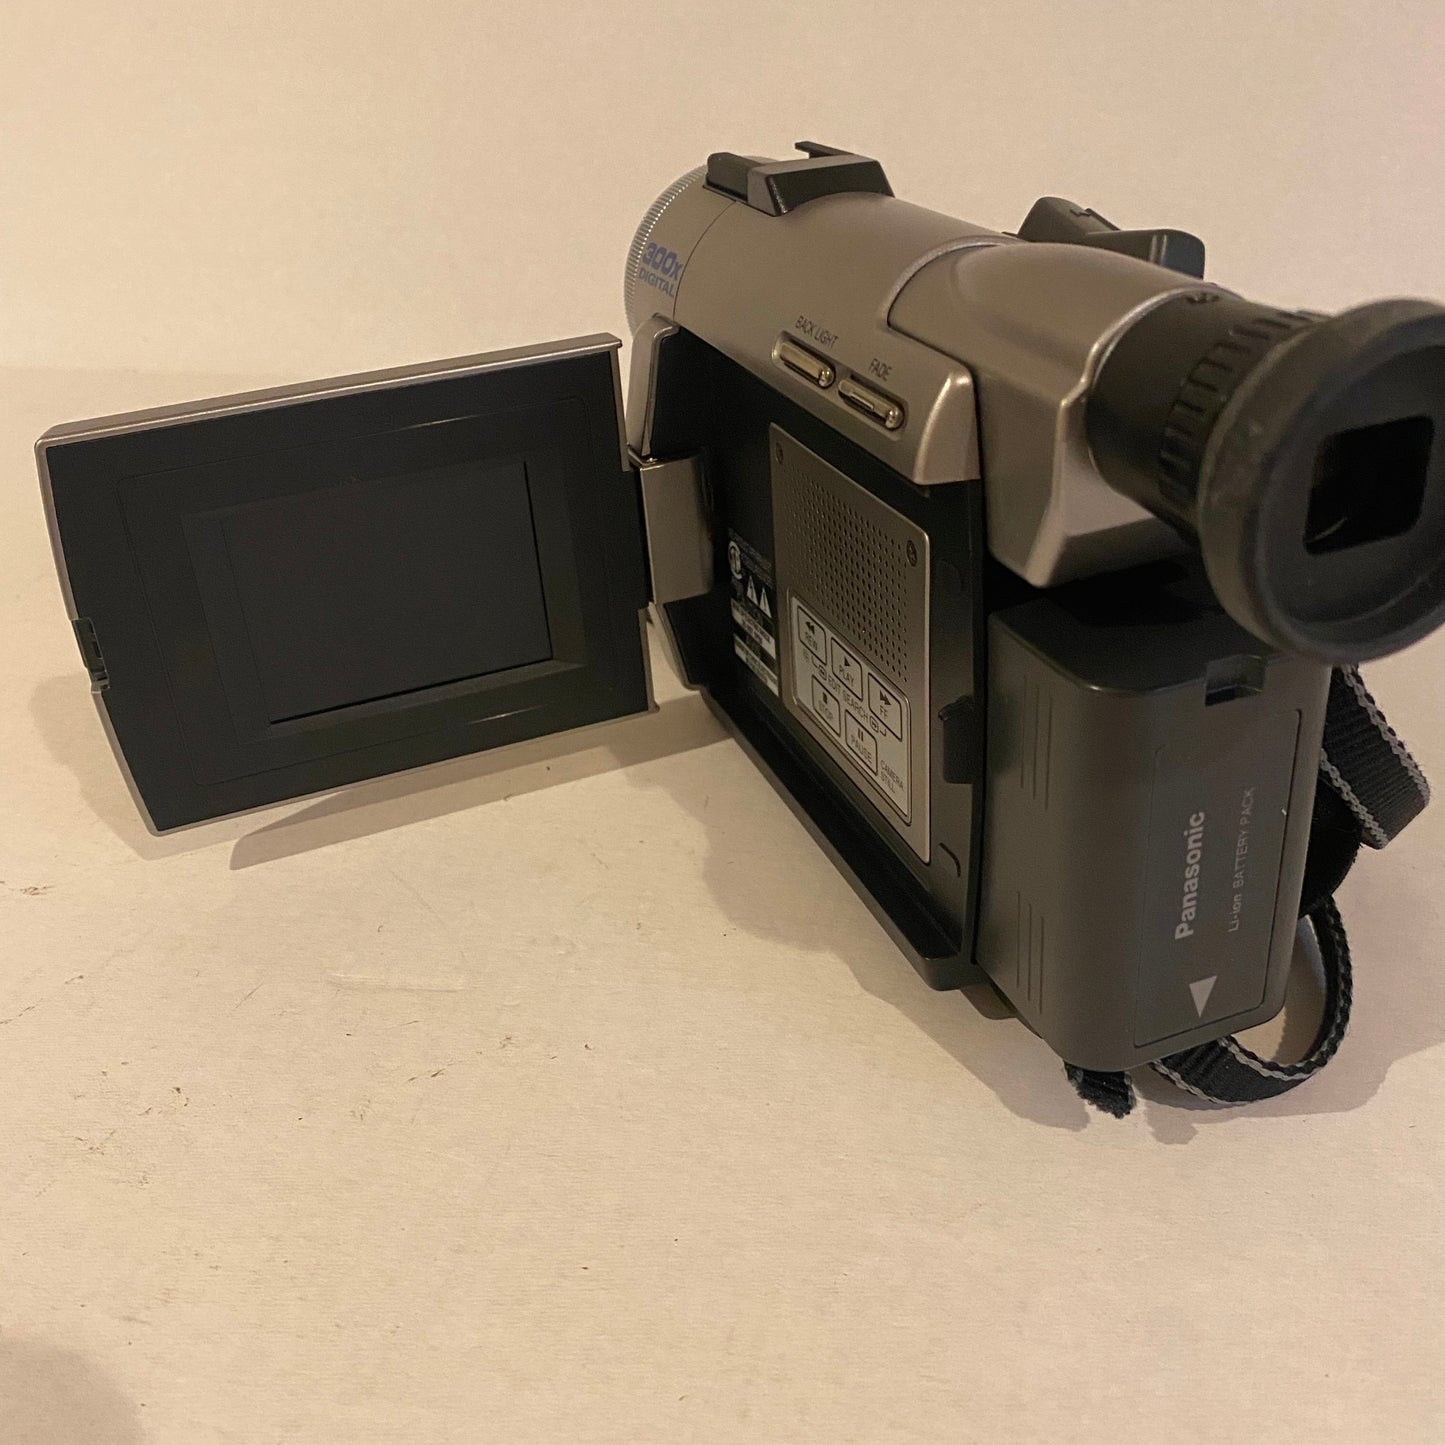 Panasonic PalmSight Mini DV Camcorder - PV-DV900